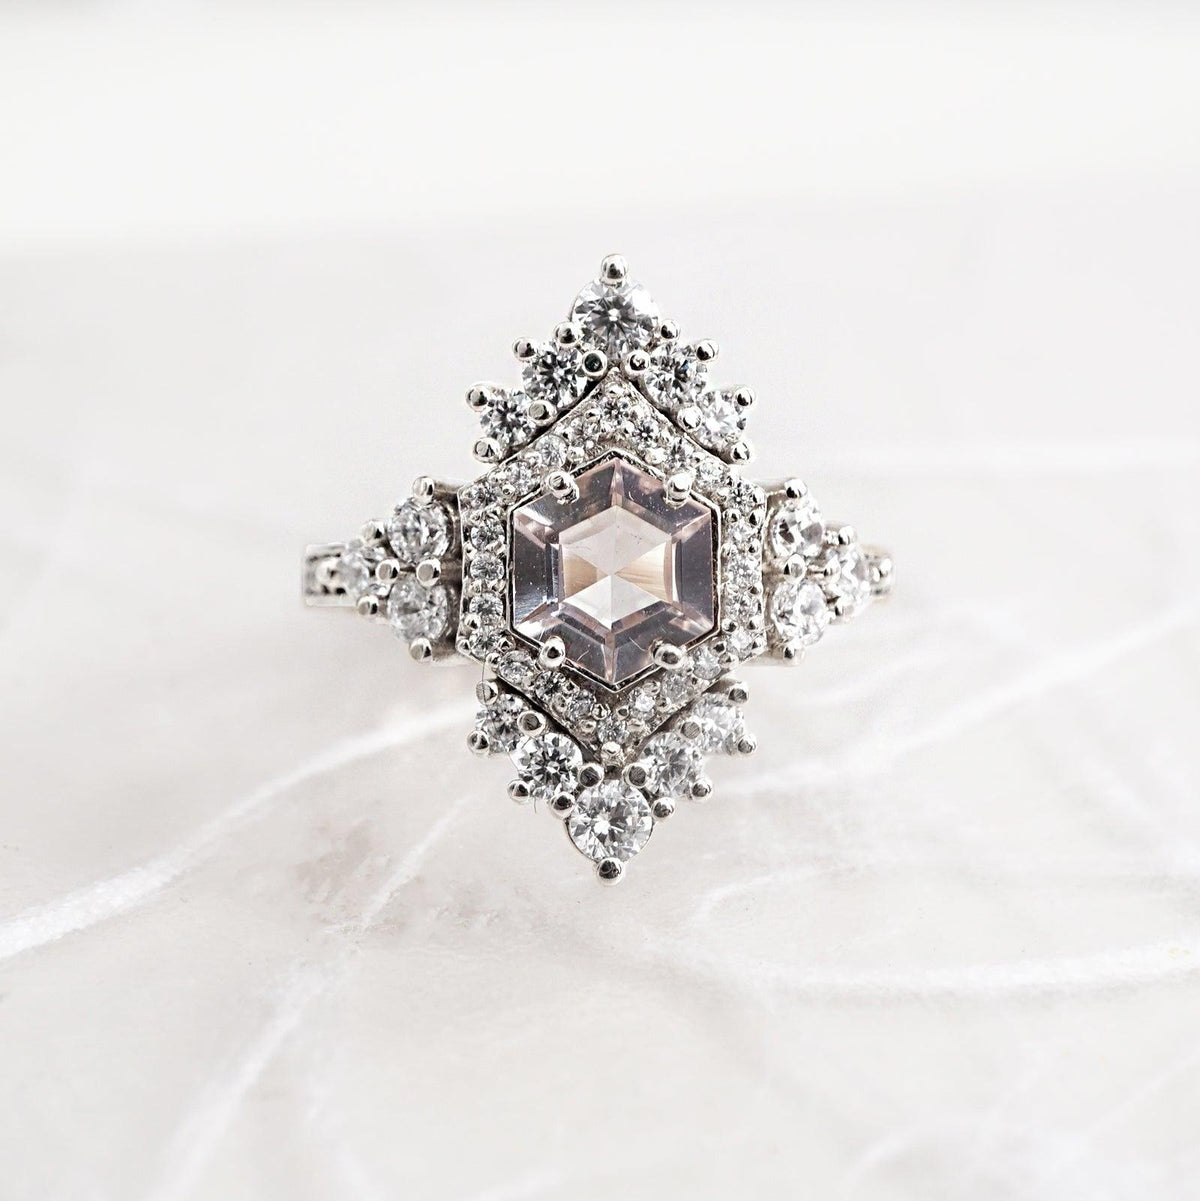 Chandelier Morganite Diamond Ring - Tippy Taste Jewelry